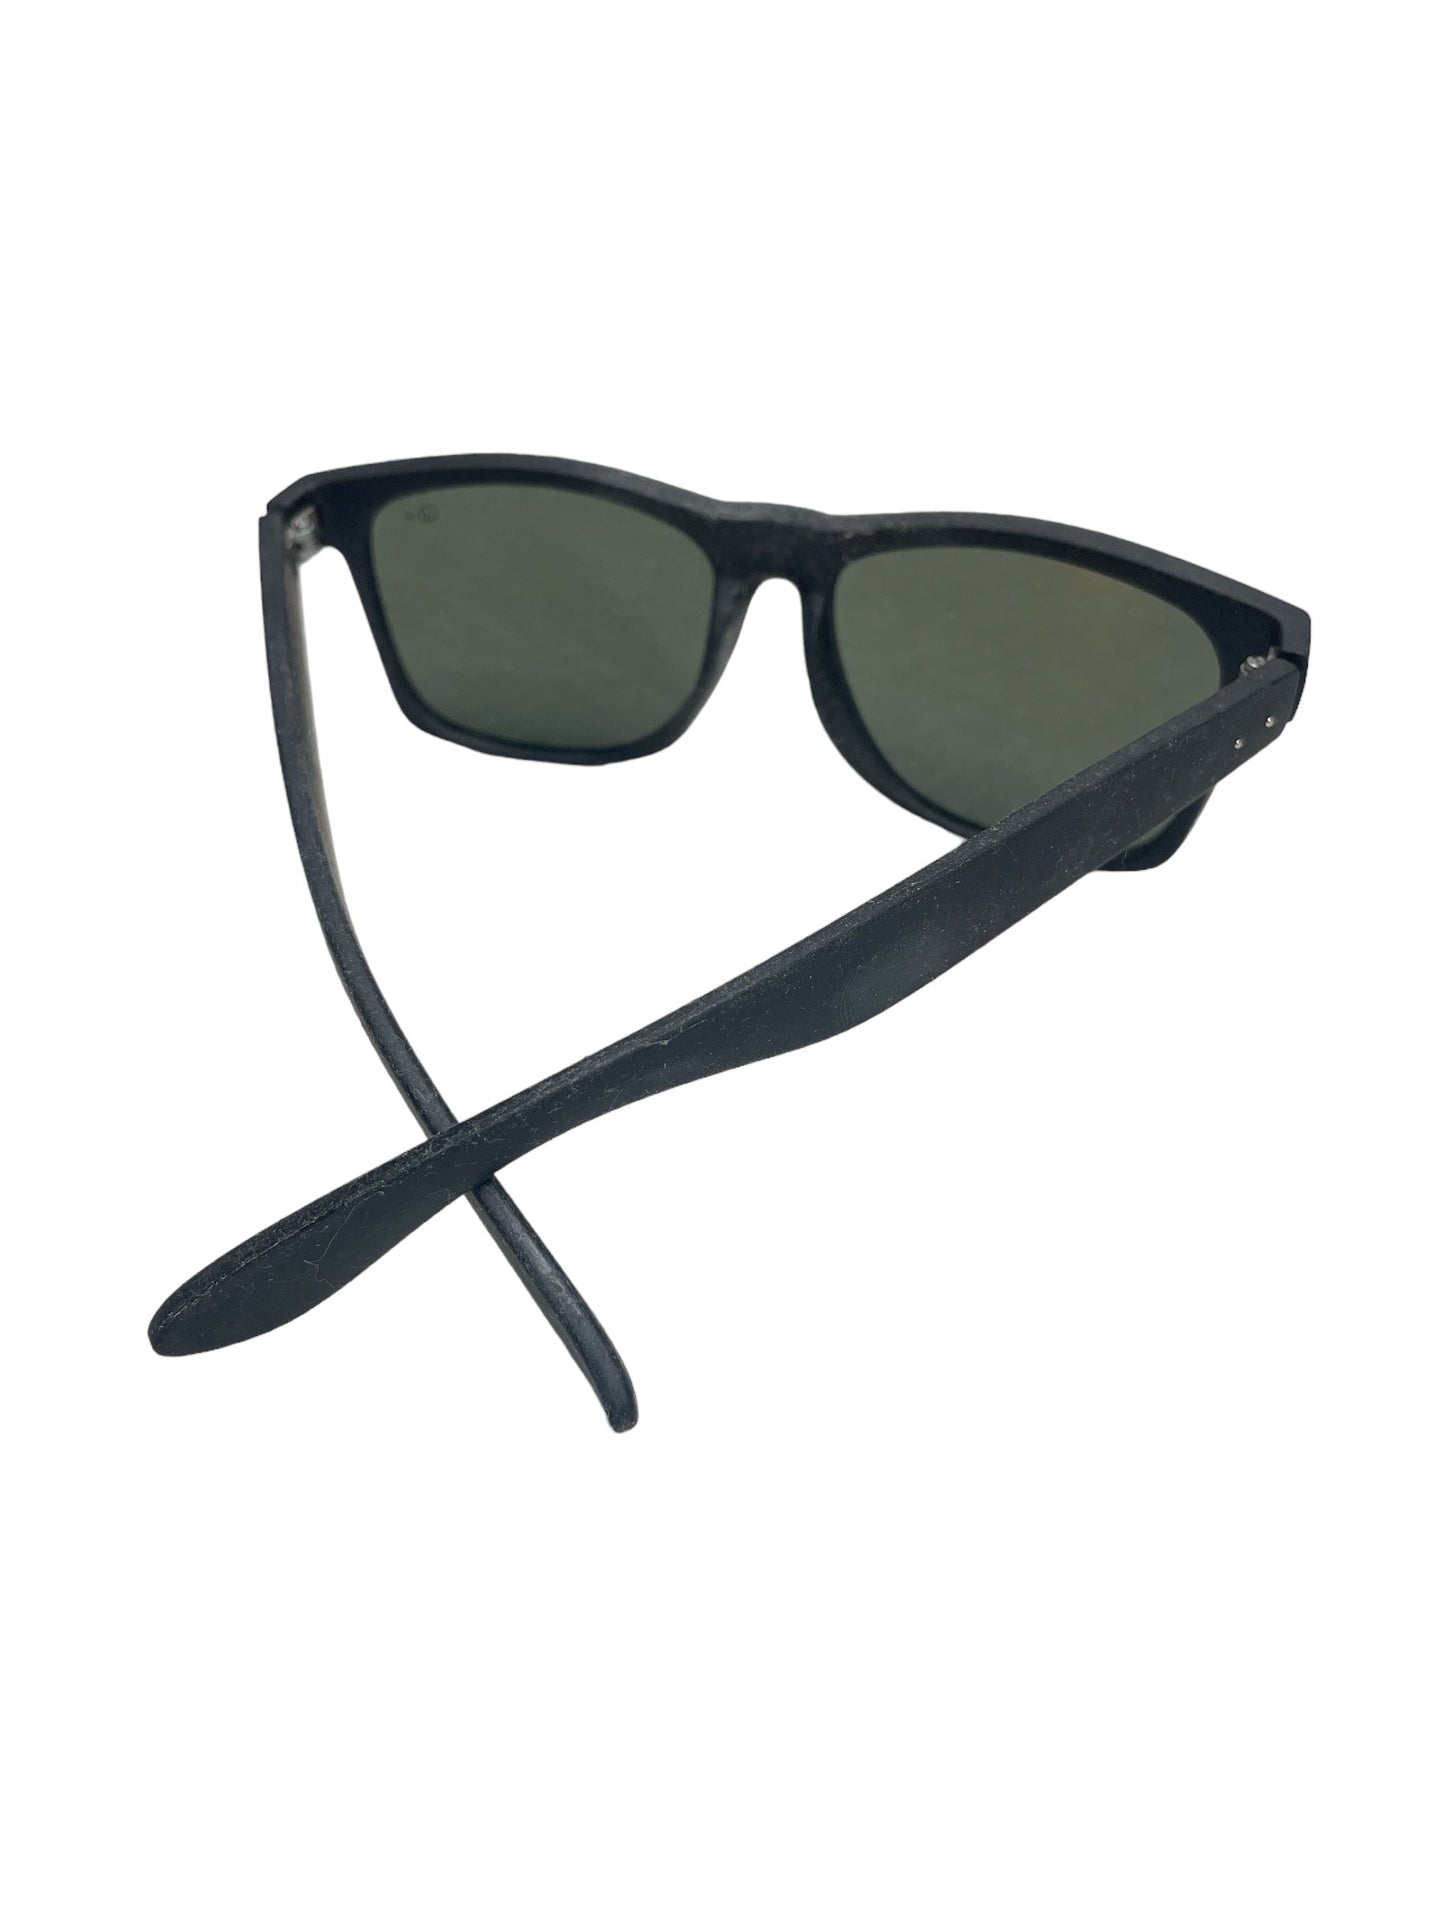 Sunglasses Designer By Cmb